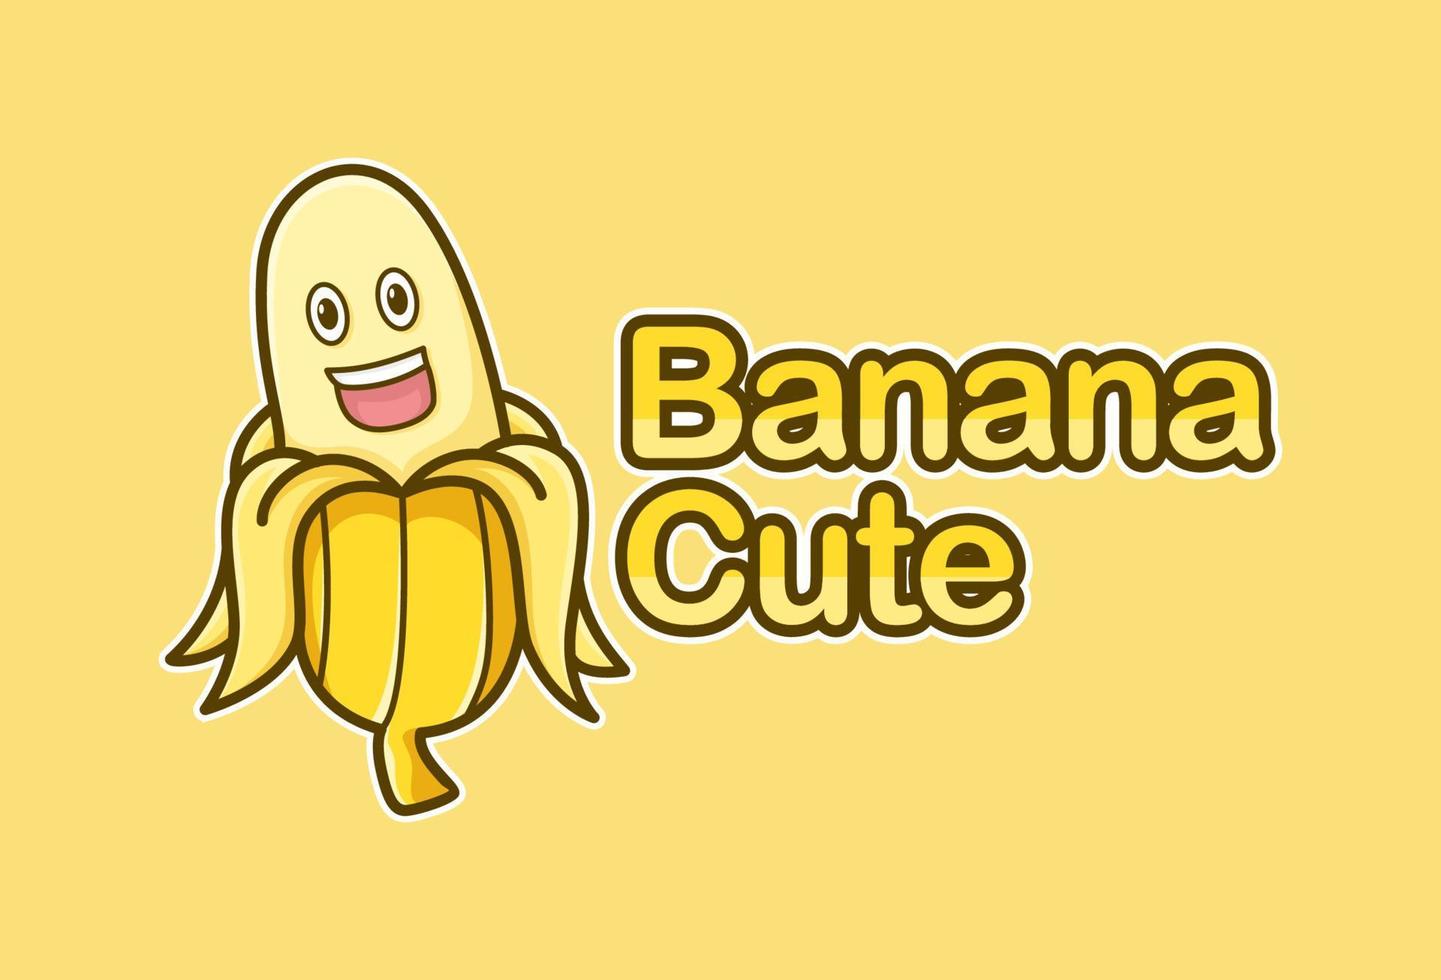 Banana Logo Vector Design. Mascot illustration design of cute banana